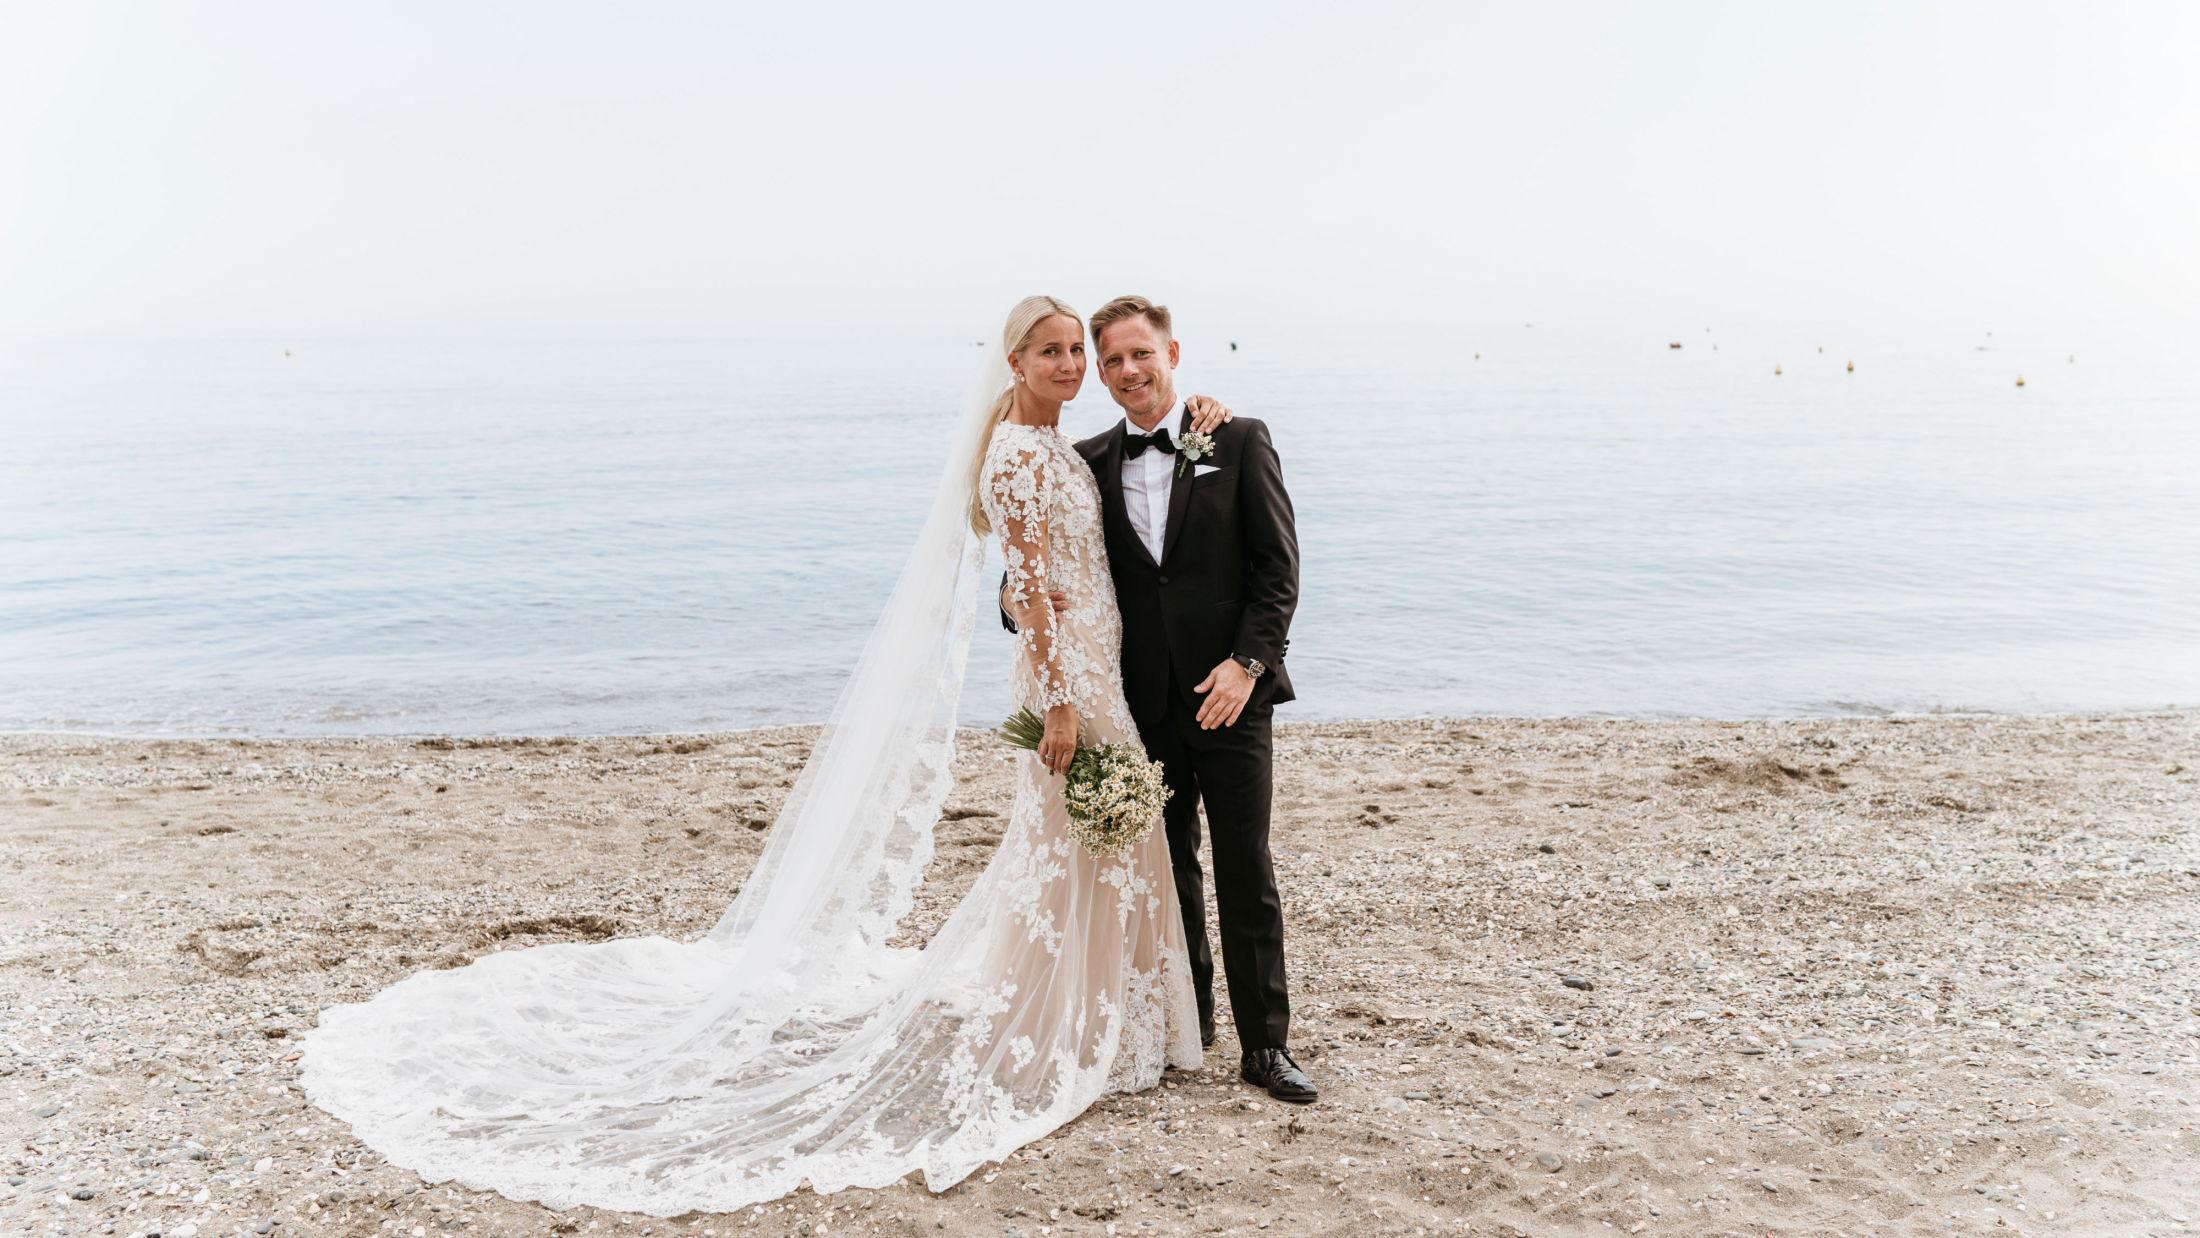 NYGIFT: Rikke Bye-Andersen og Torkel Aune Sondresen giftet seg i Spania. Foto: Sara Lobla